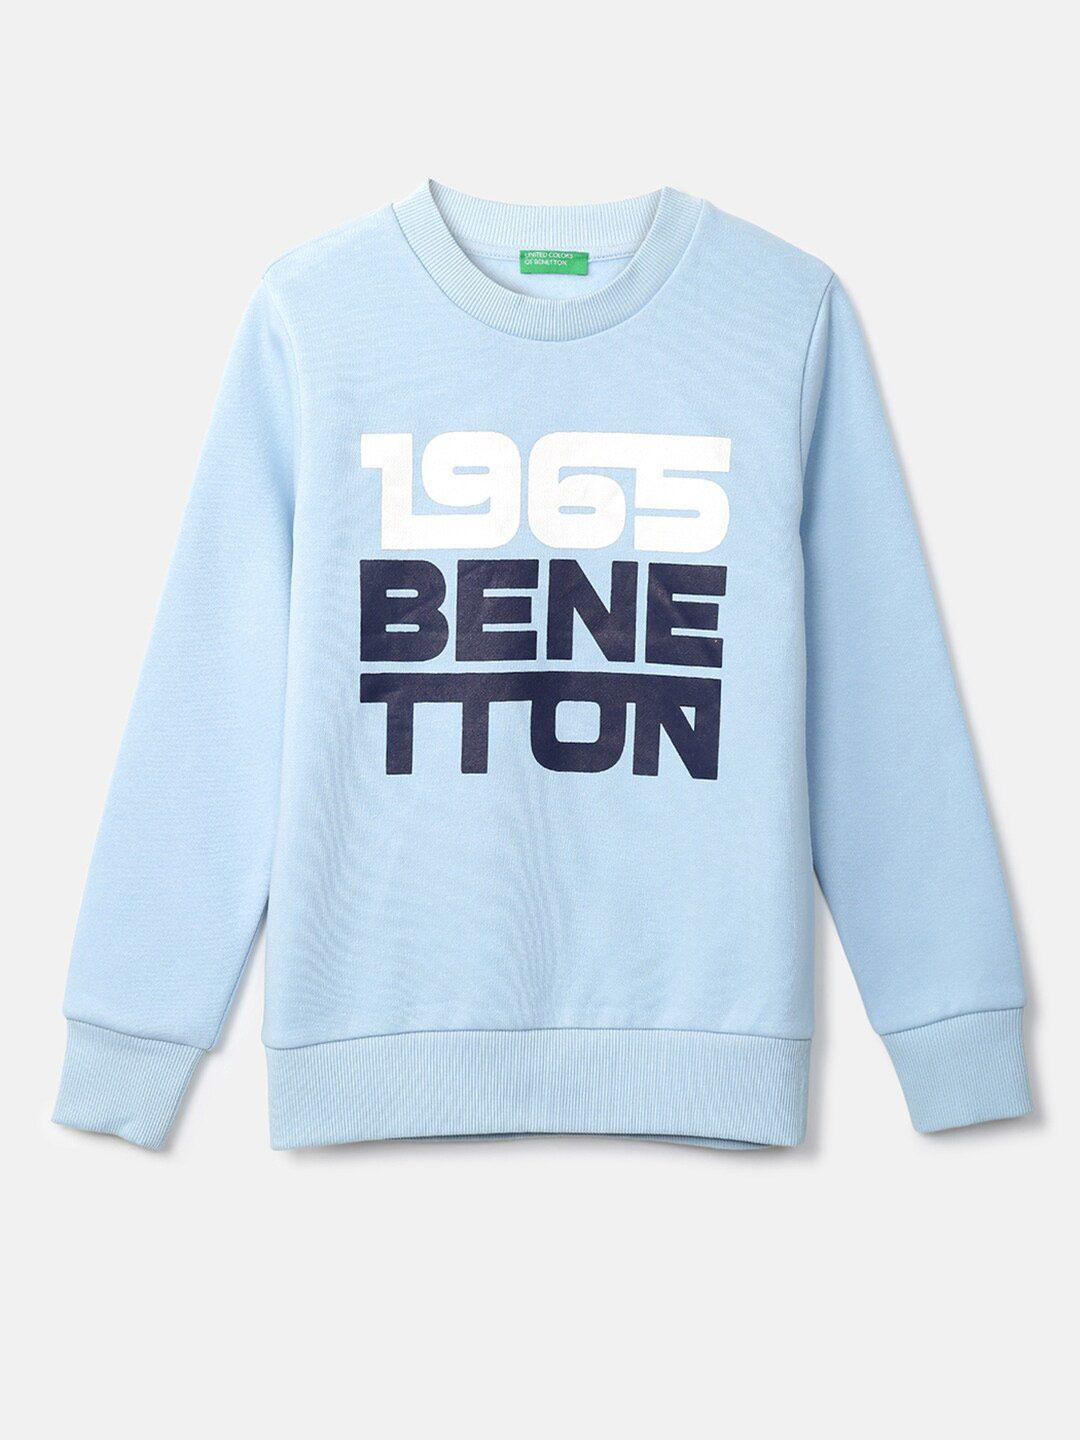 united-colors-of-benetton-boys-blue-printed-sweatshirt